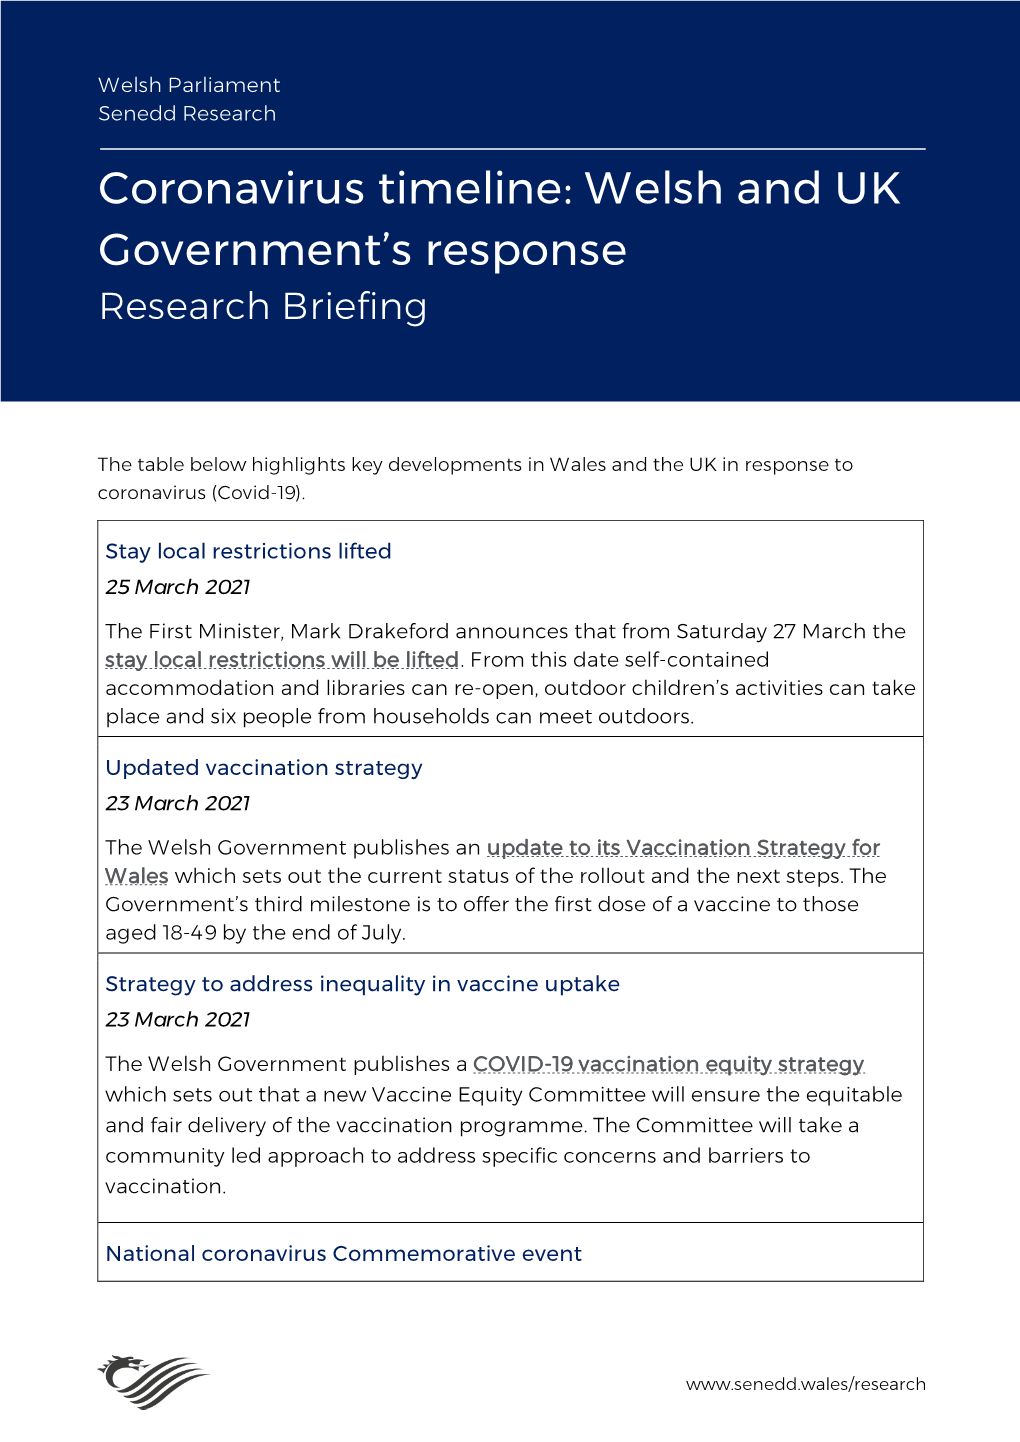 Coronavirus Timeline: Welsh and UK Government's Response